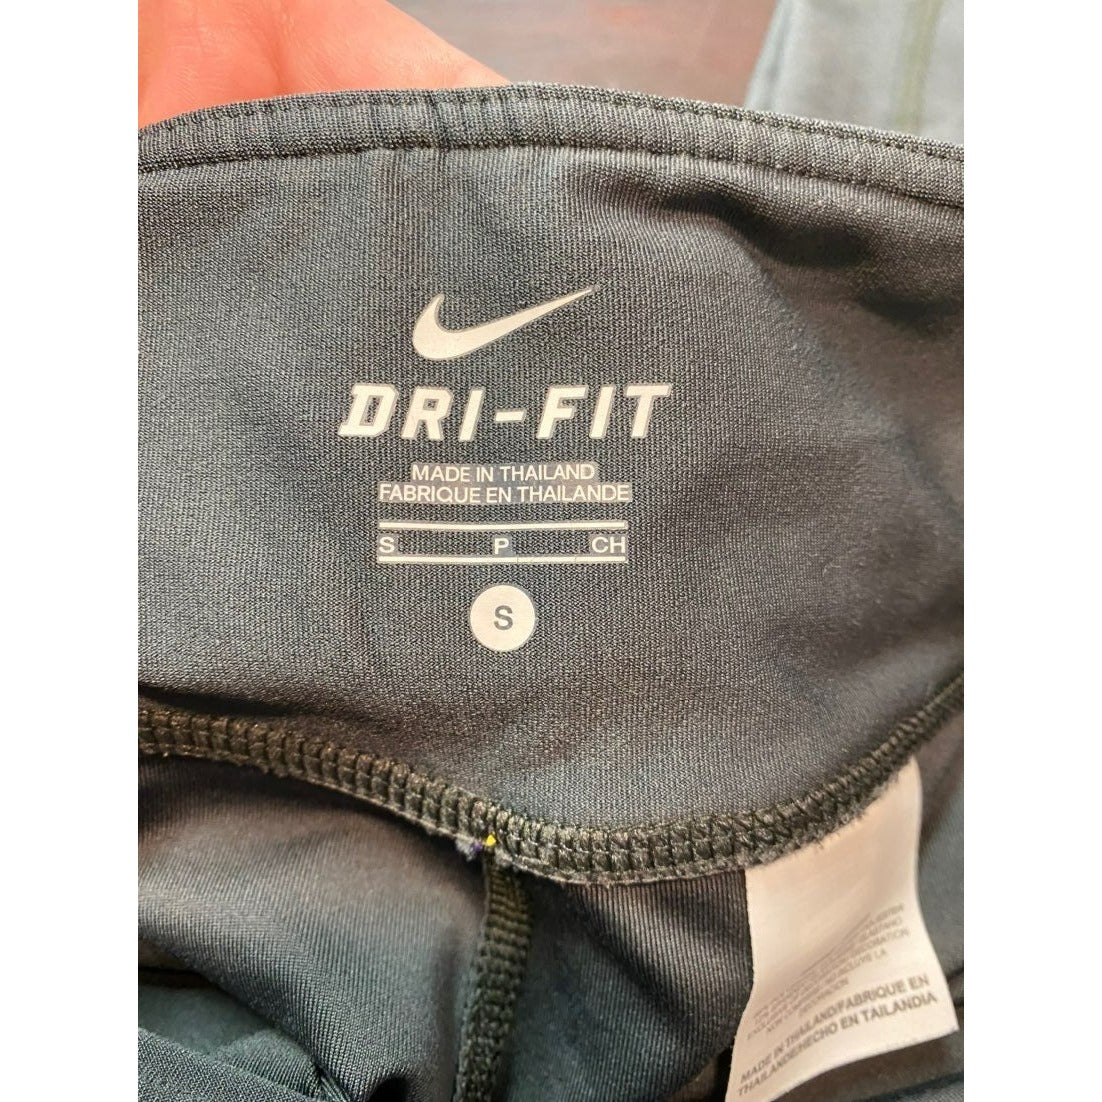 Nike dri fit Small yoga pants leggings